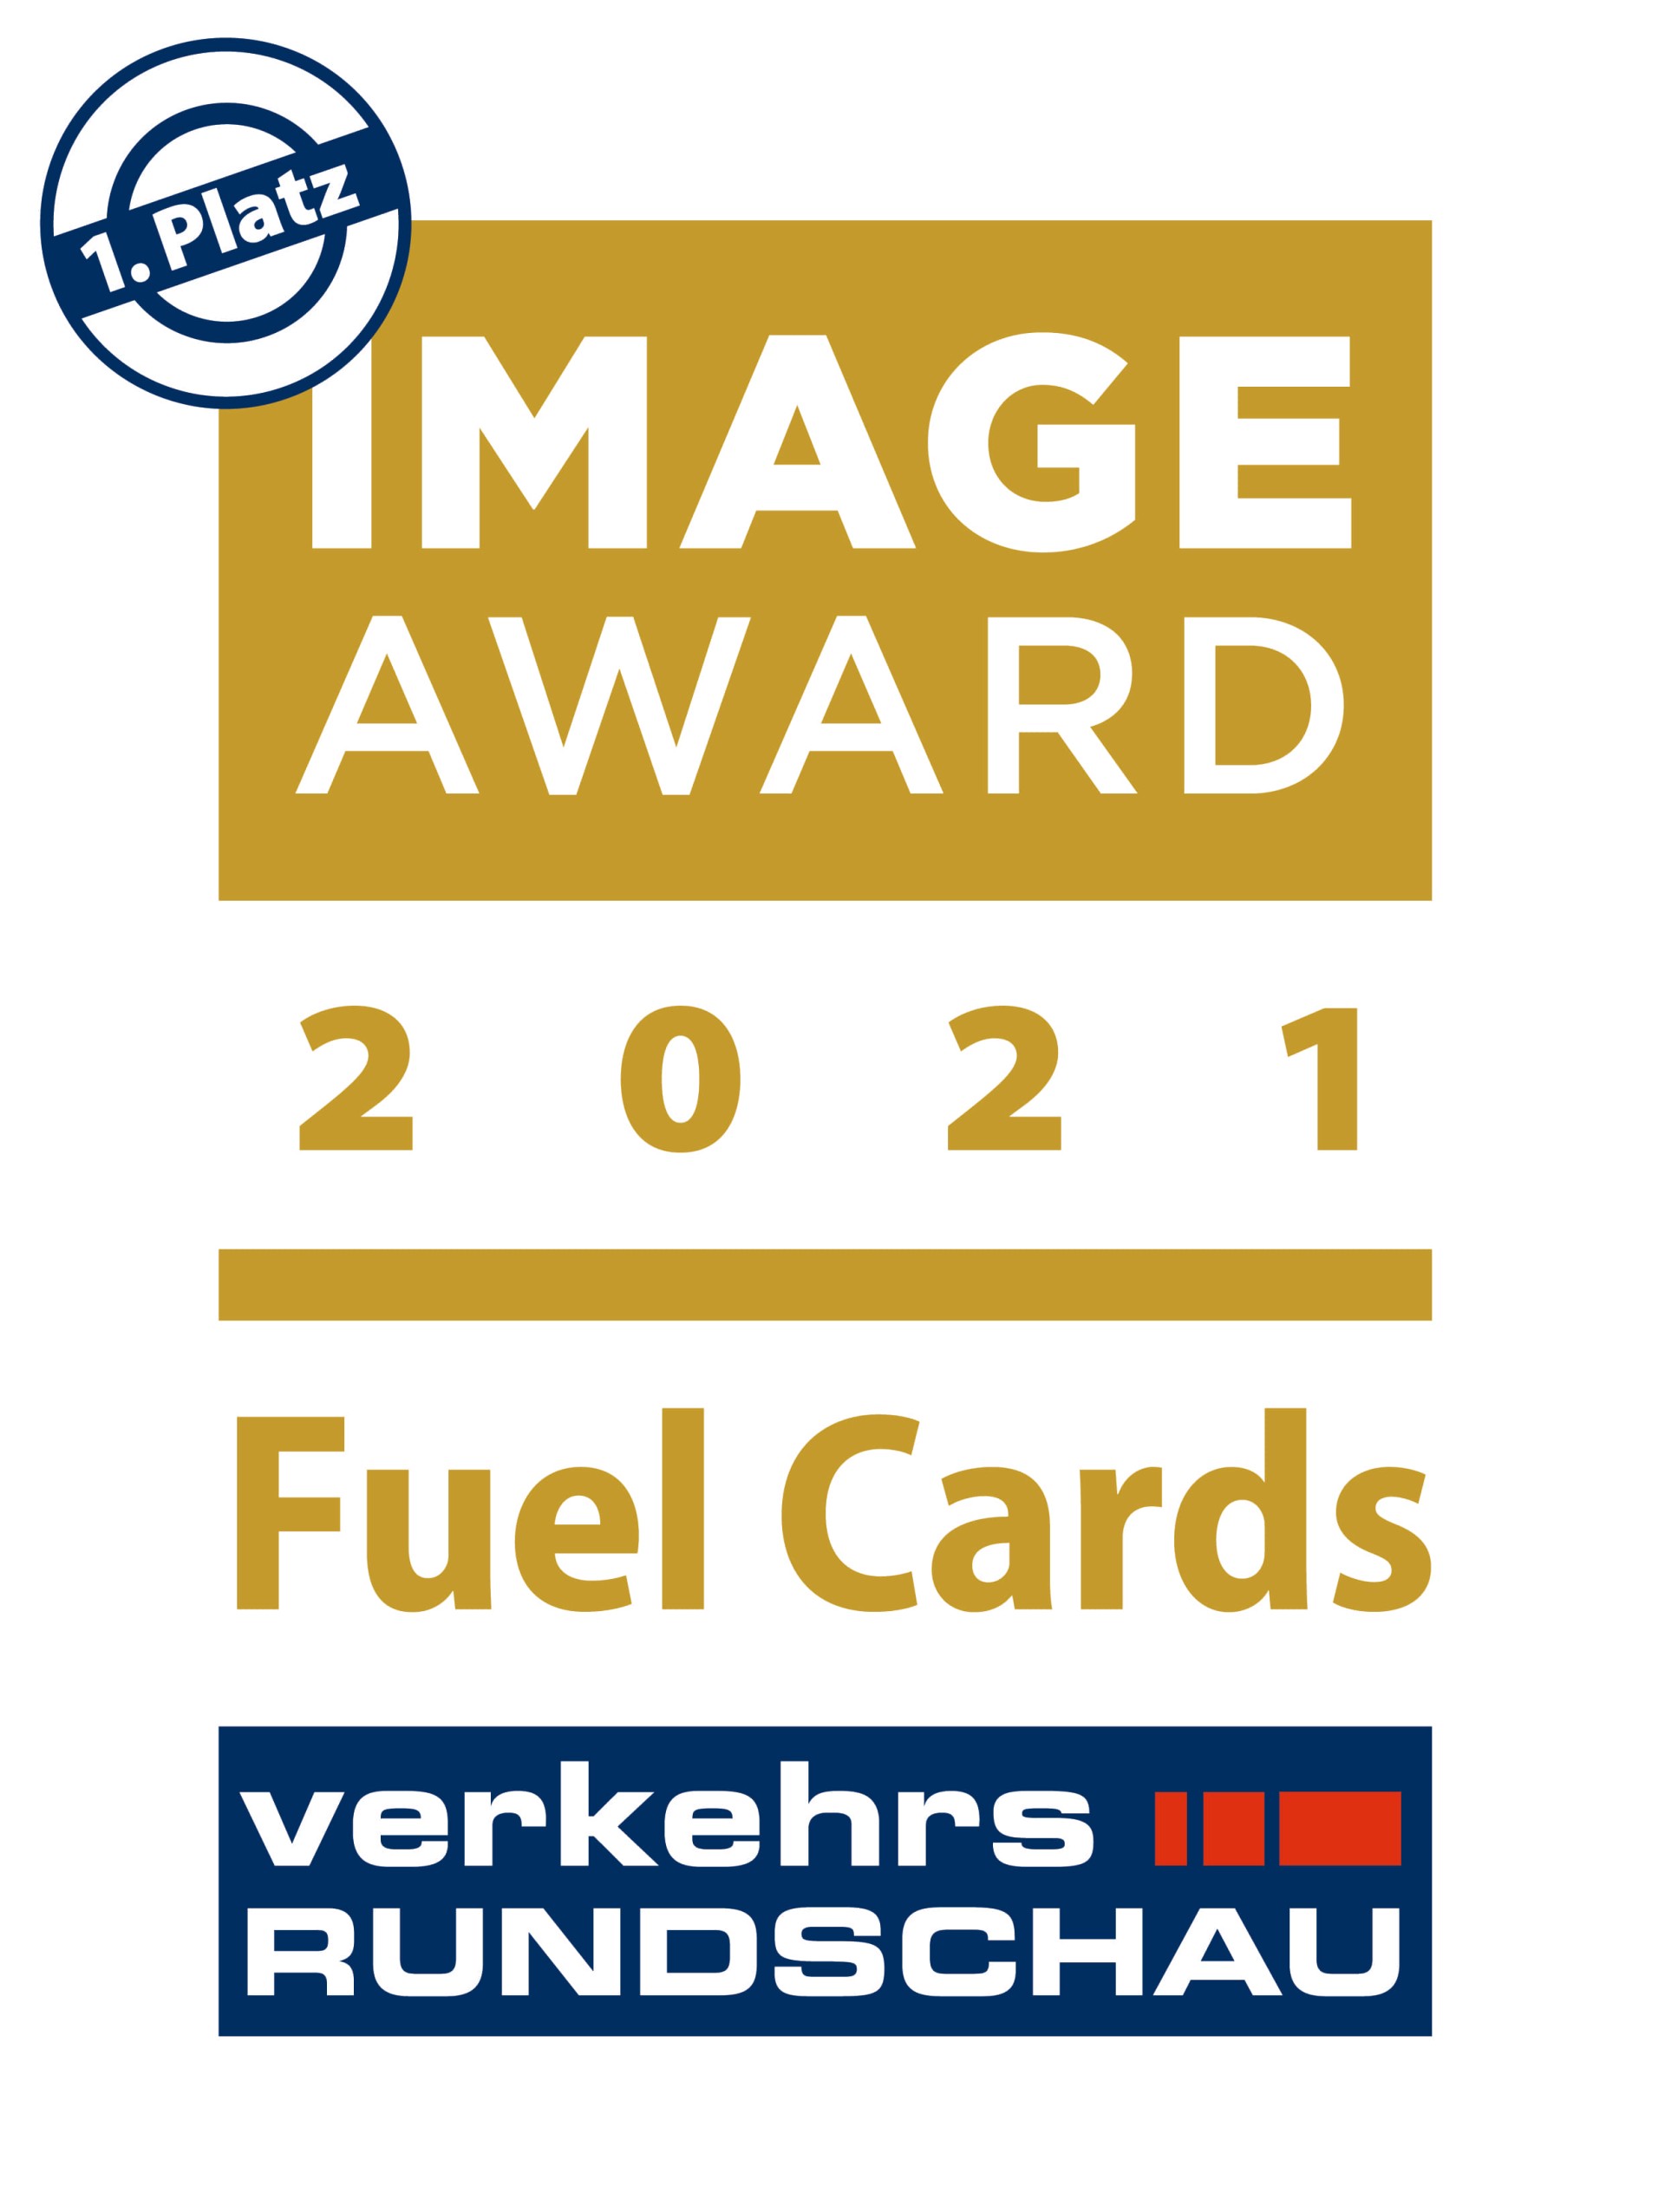 award Image Award